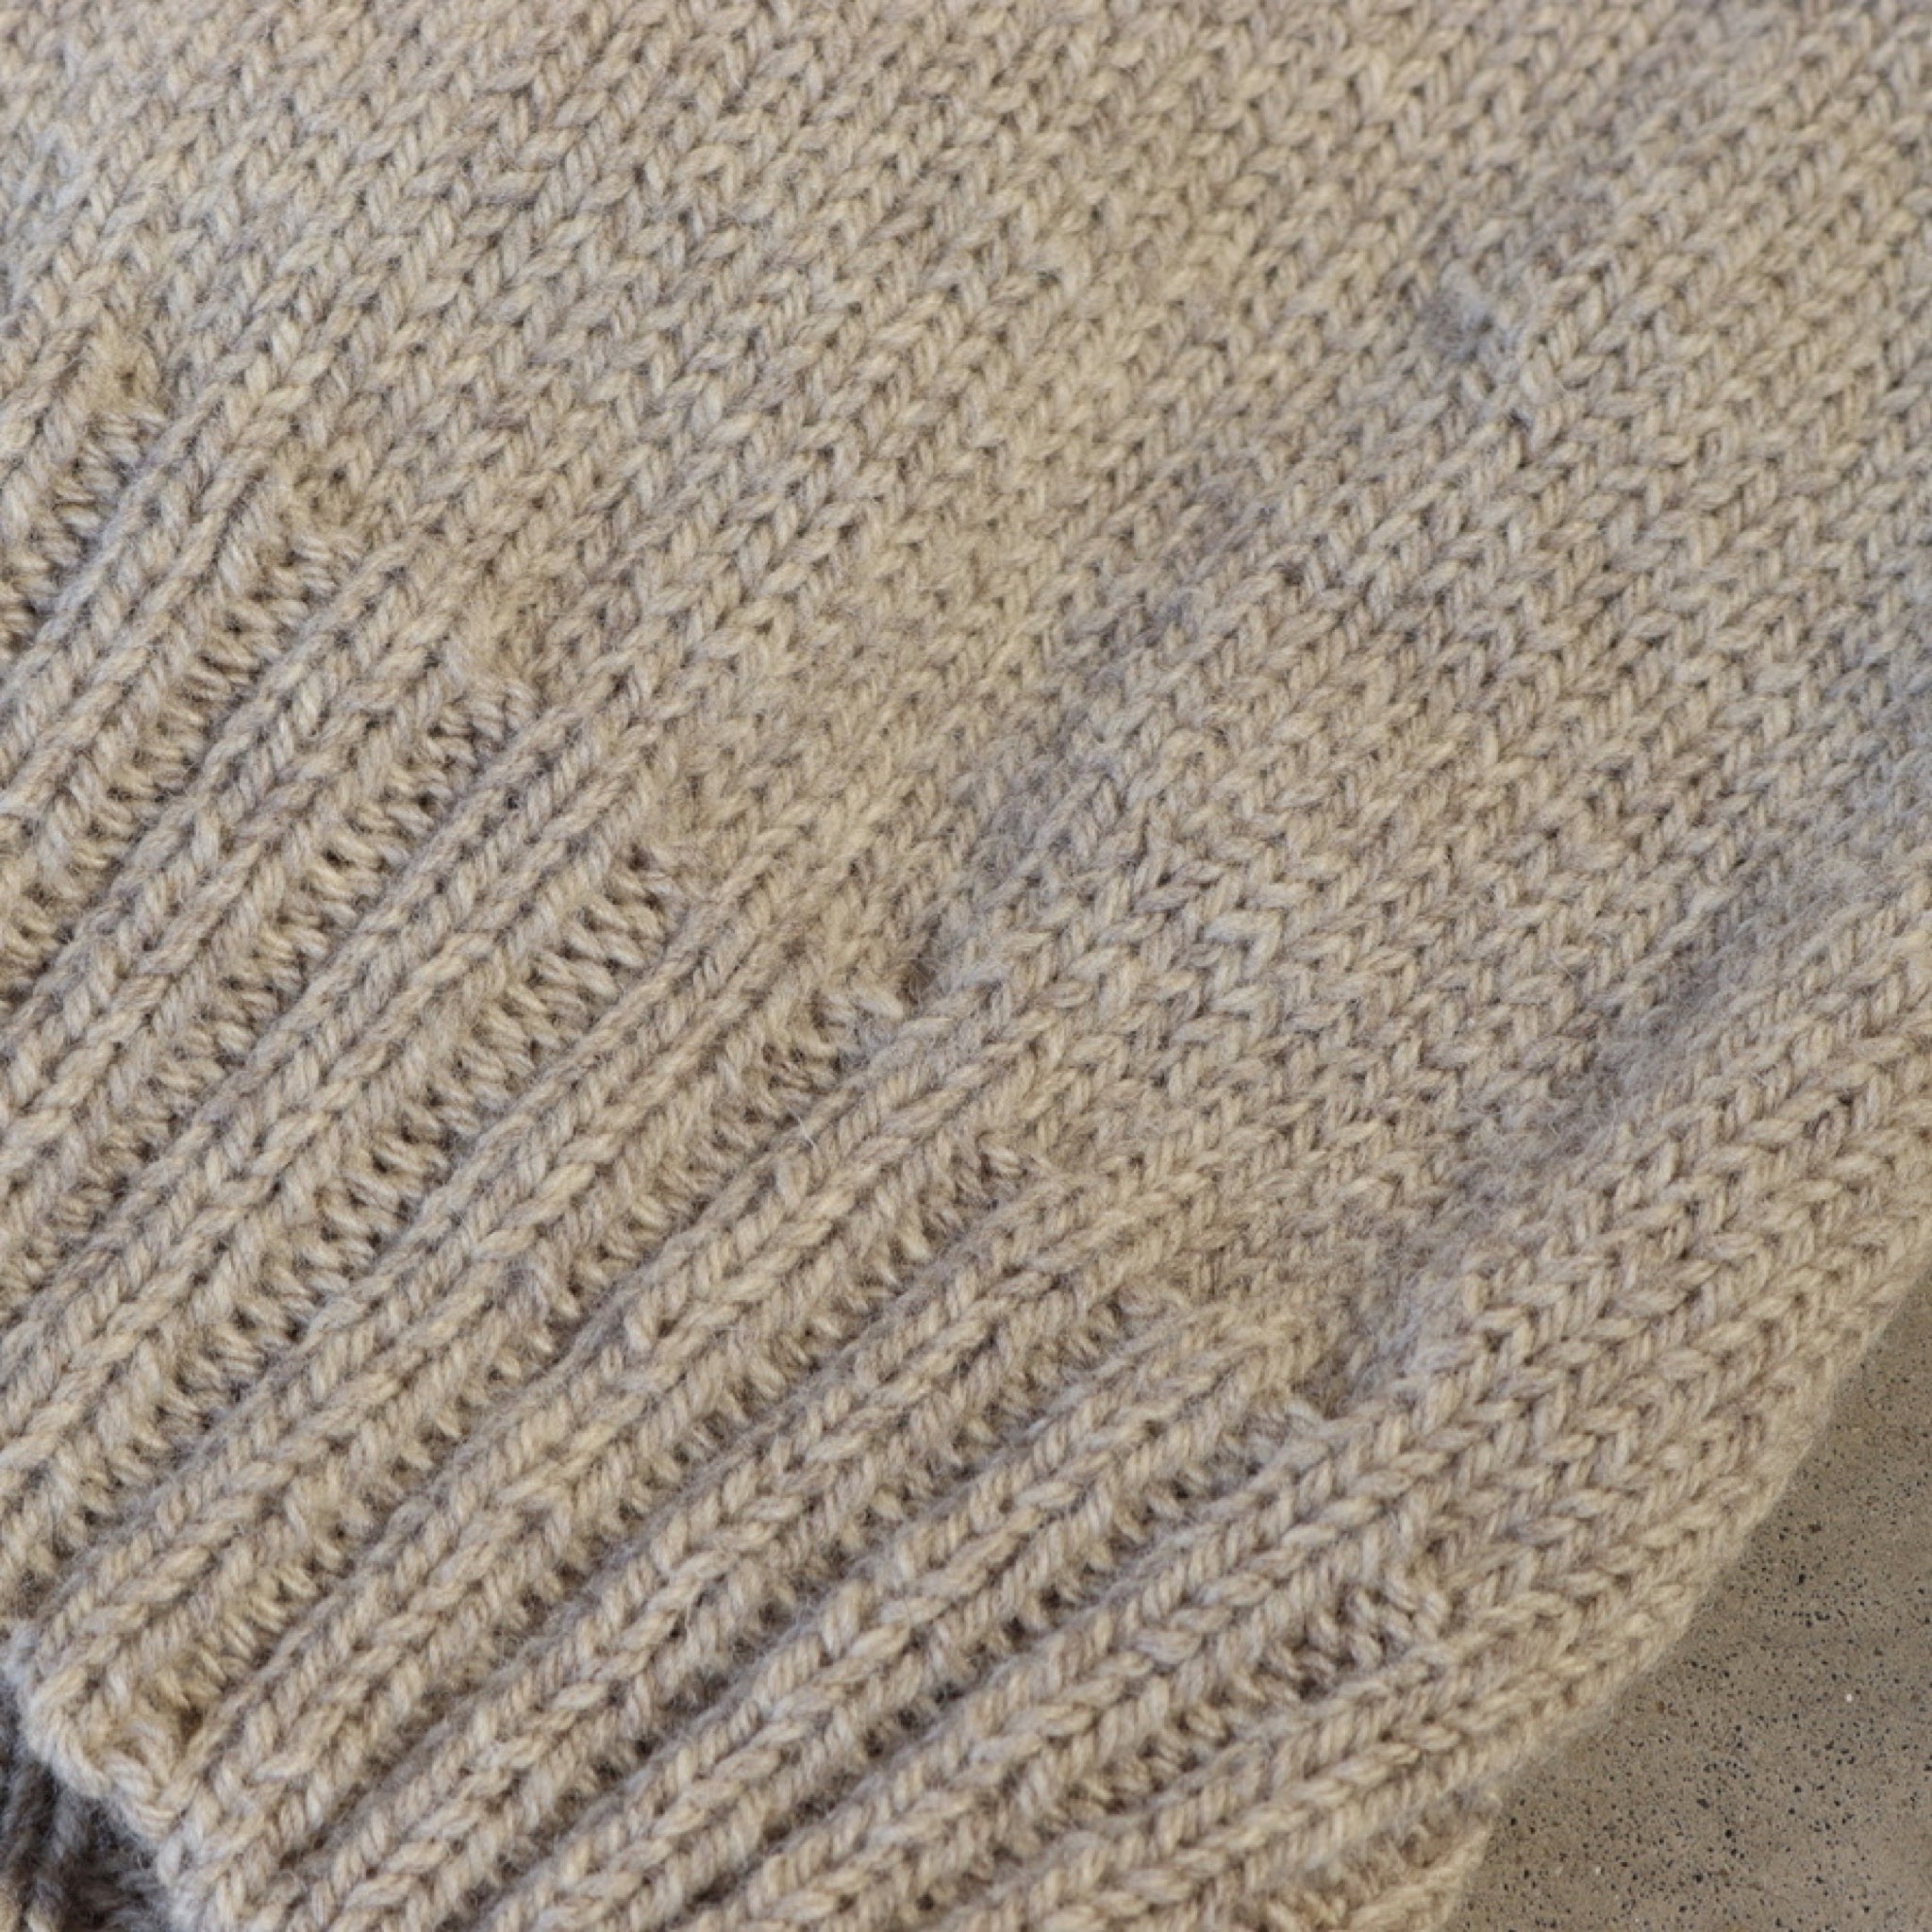 Kesennuma knitting etude - 15